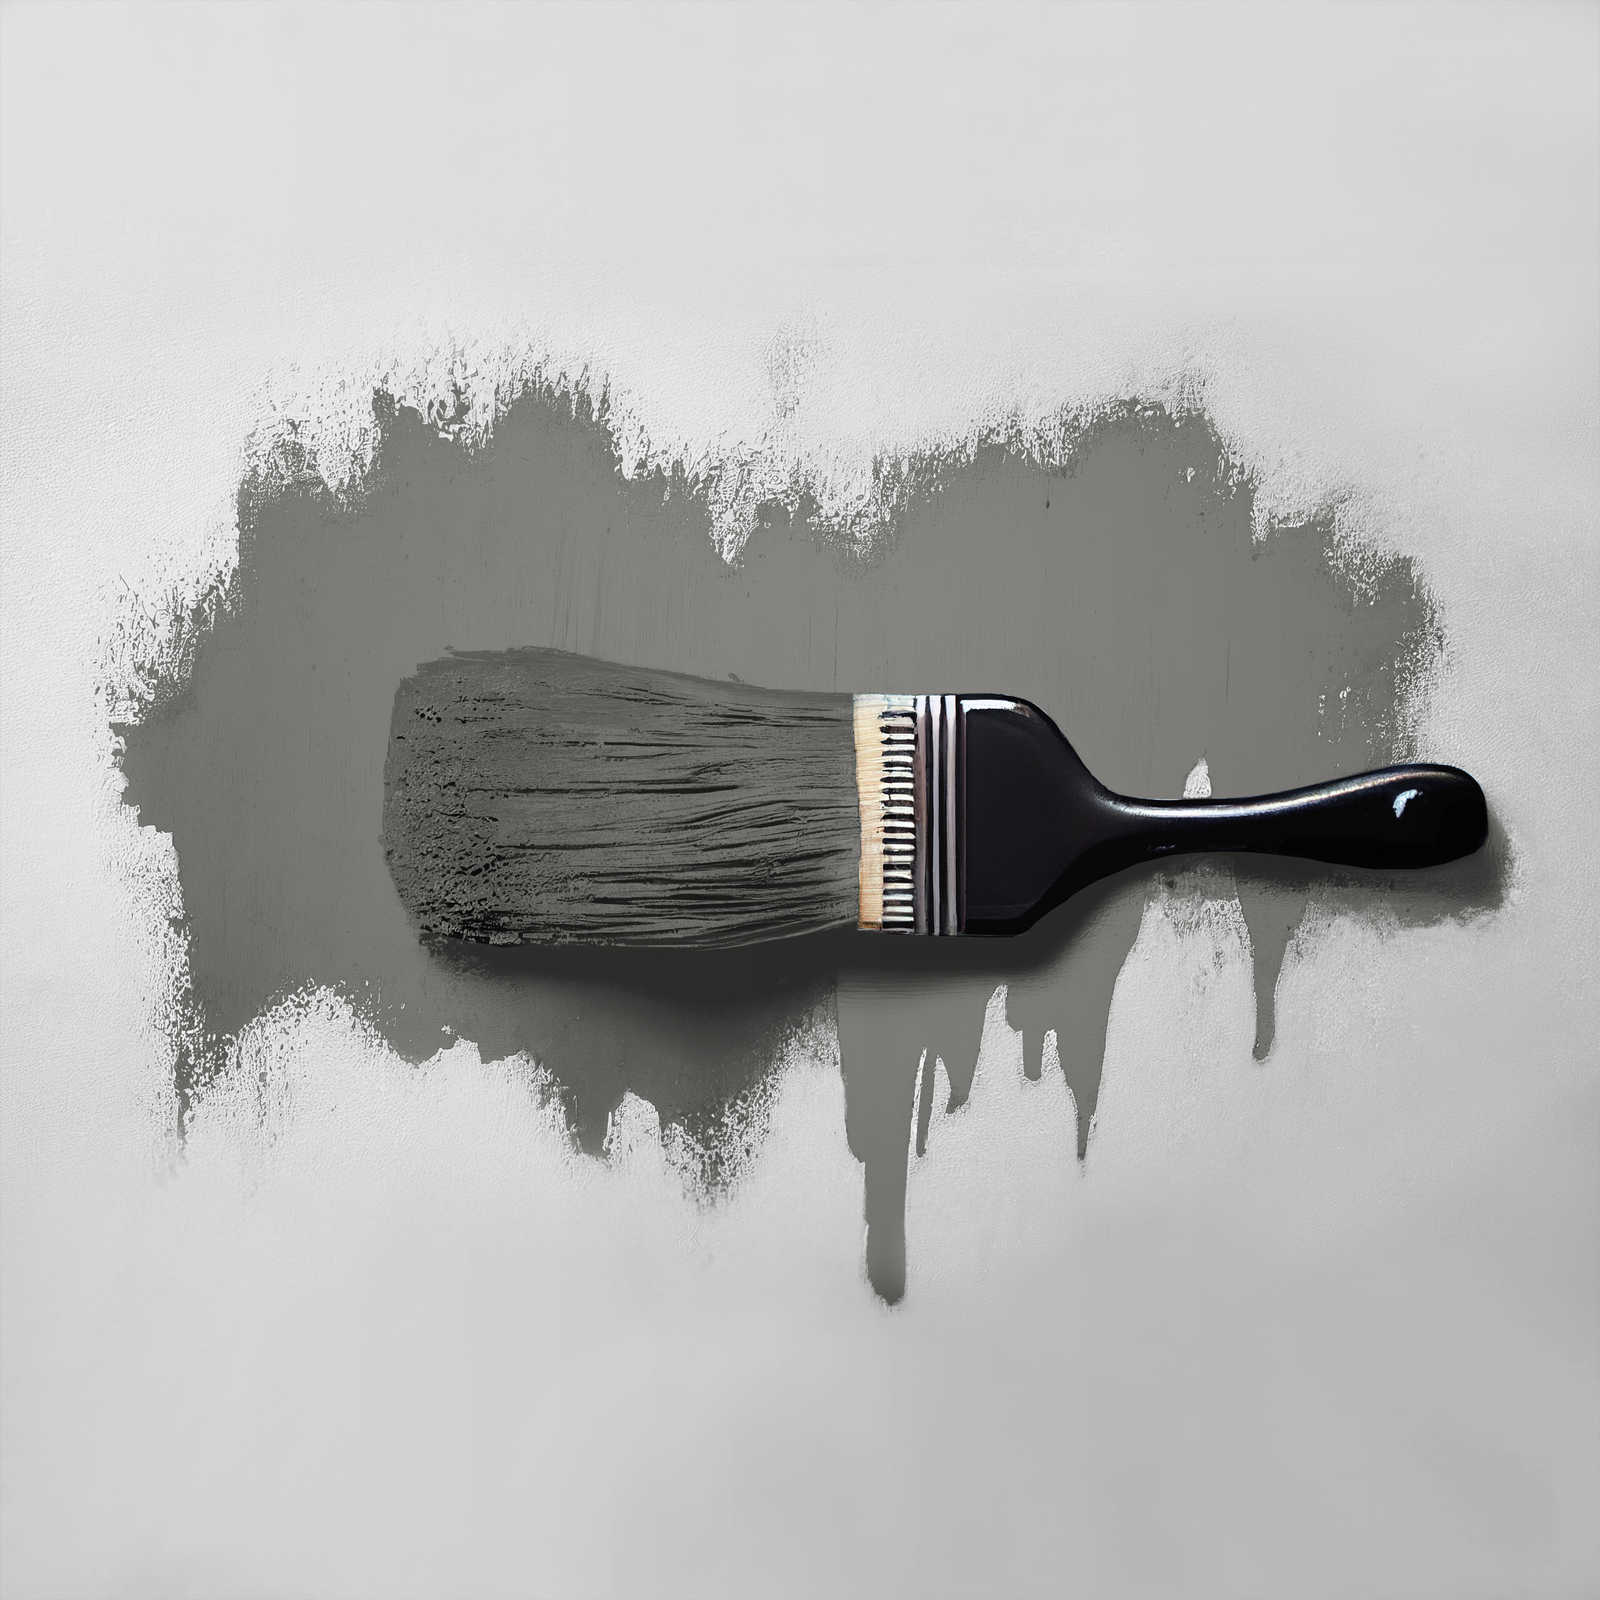             Wall Paint TCK1013 »Poised Pepper« in dark grey – 2.5 litre
        